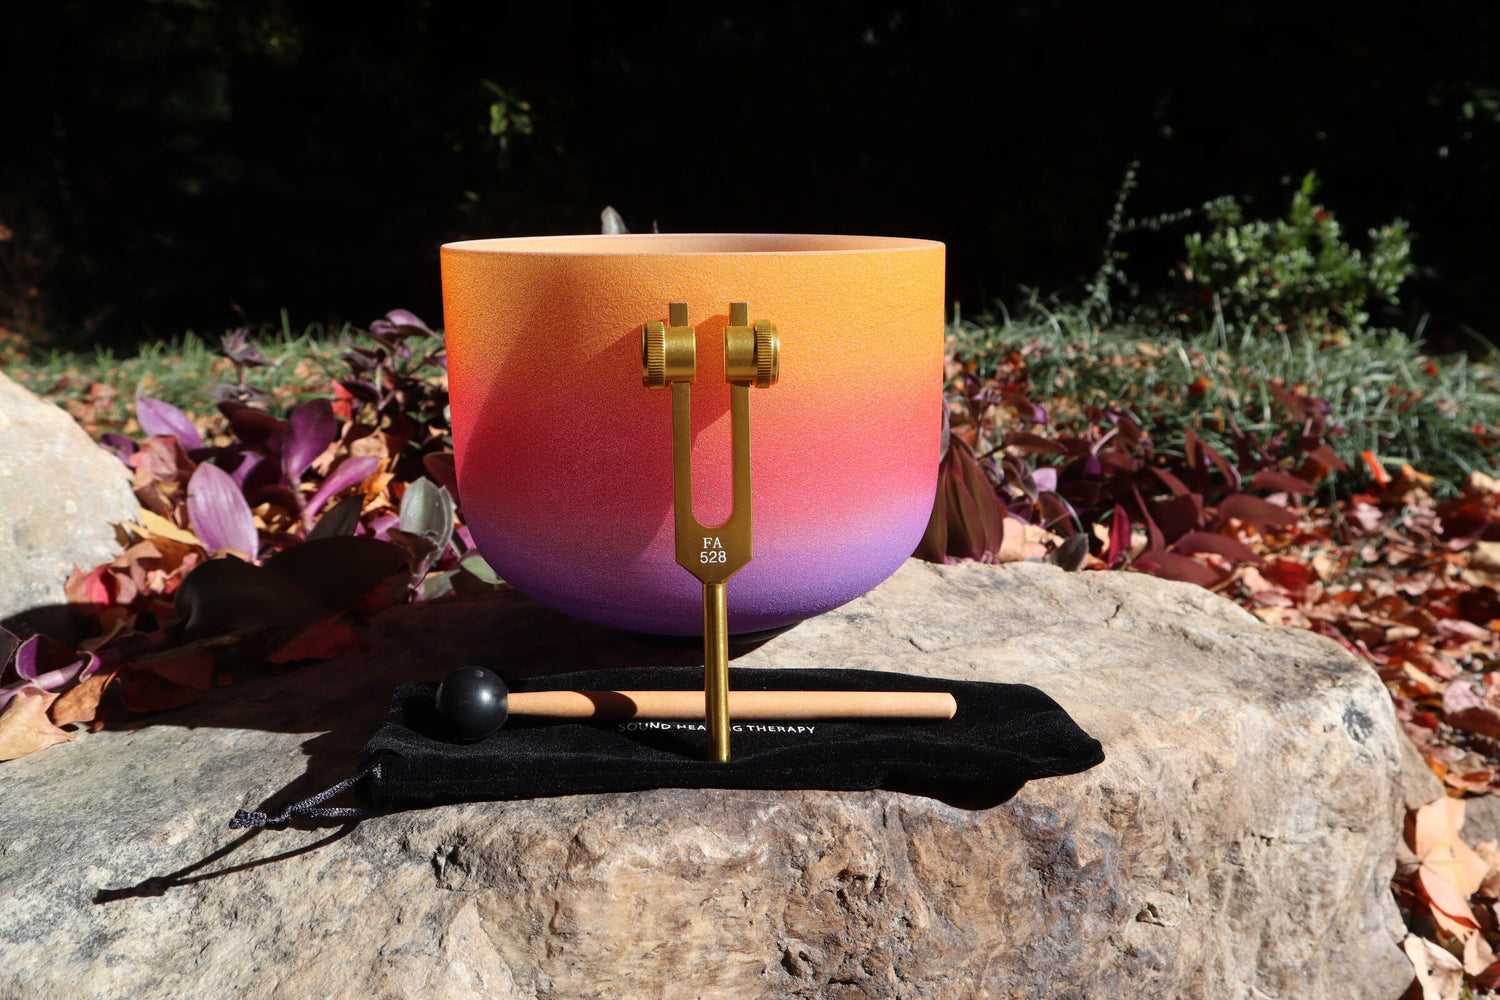 Desert Flower - 432Hz 8" Solar Plexus Chakra E Note Crystal Singing Bowl - Mallet, Padded Carry Case, 528 Hz Solfeggio Tuning Fork